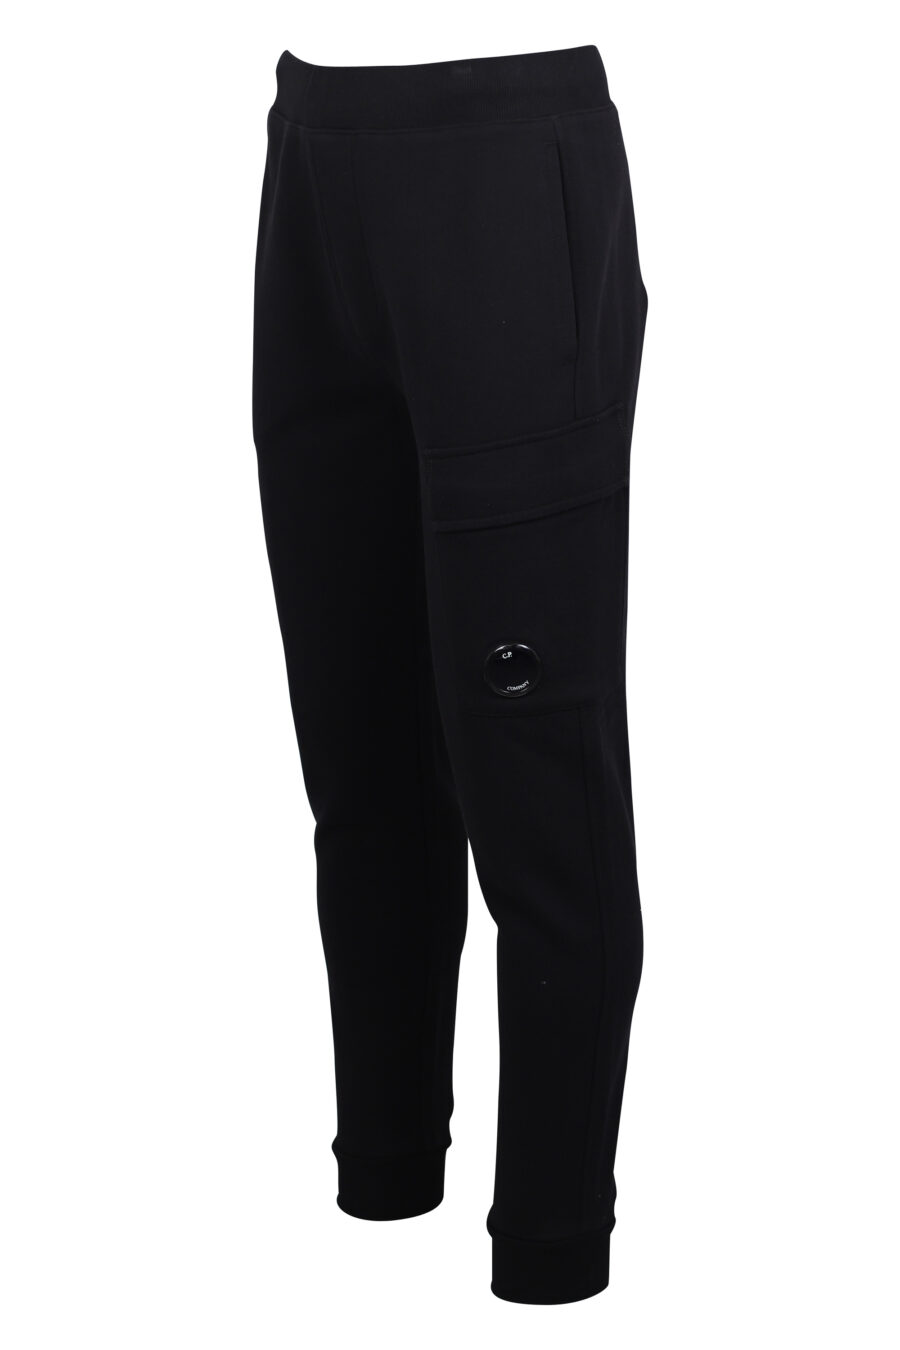 Pantalon cargo noir avec poches diagonales et mini-logo circulaire - IMG 2473